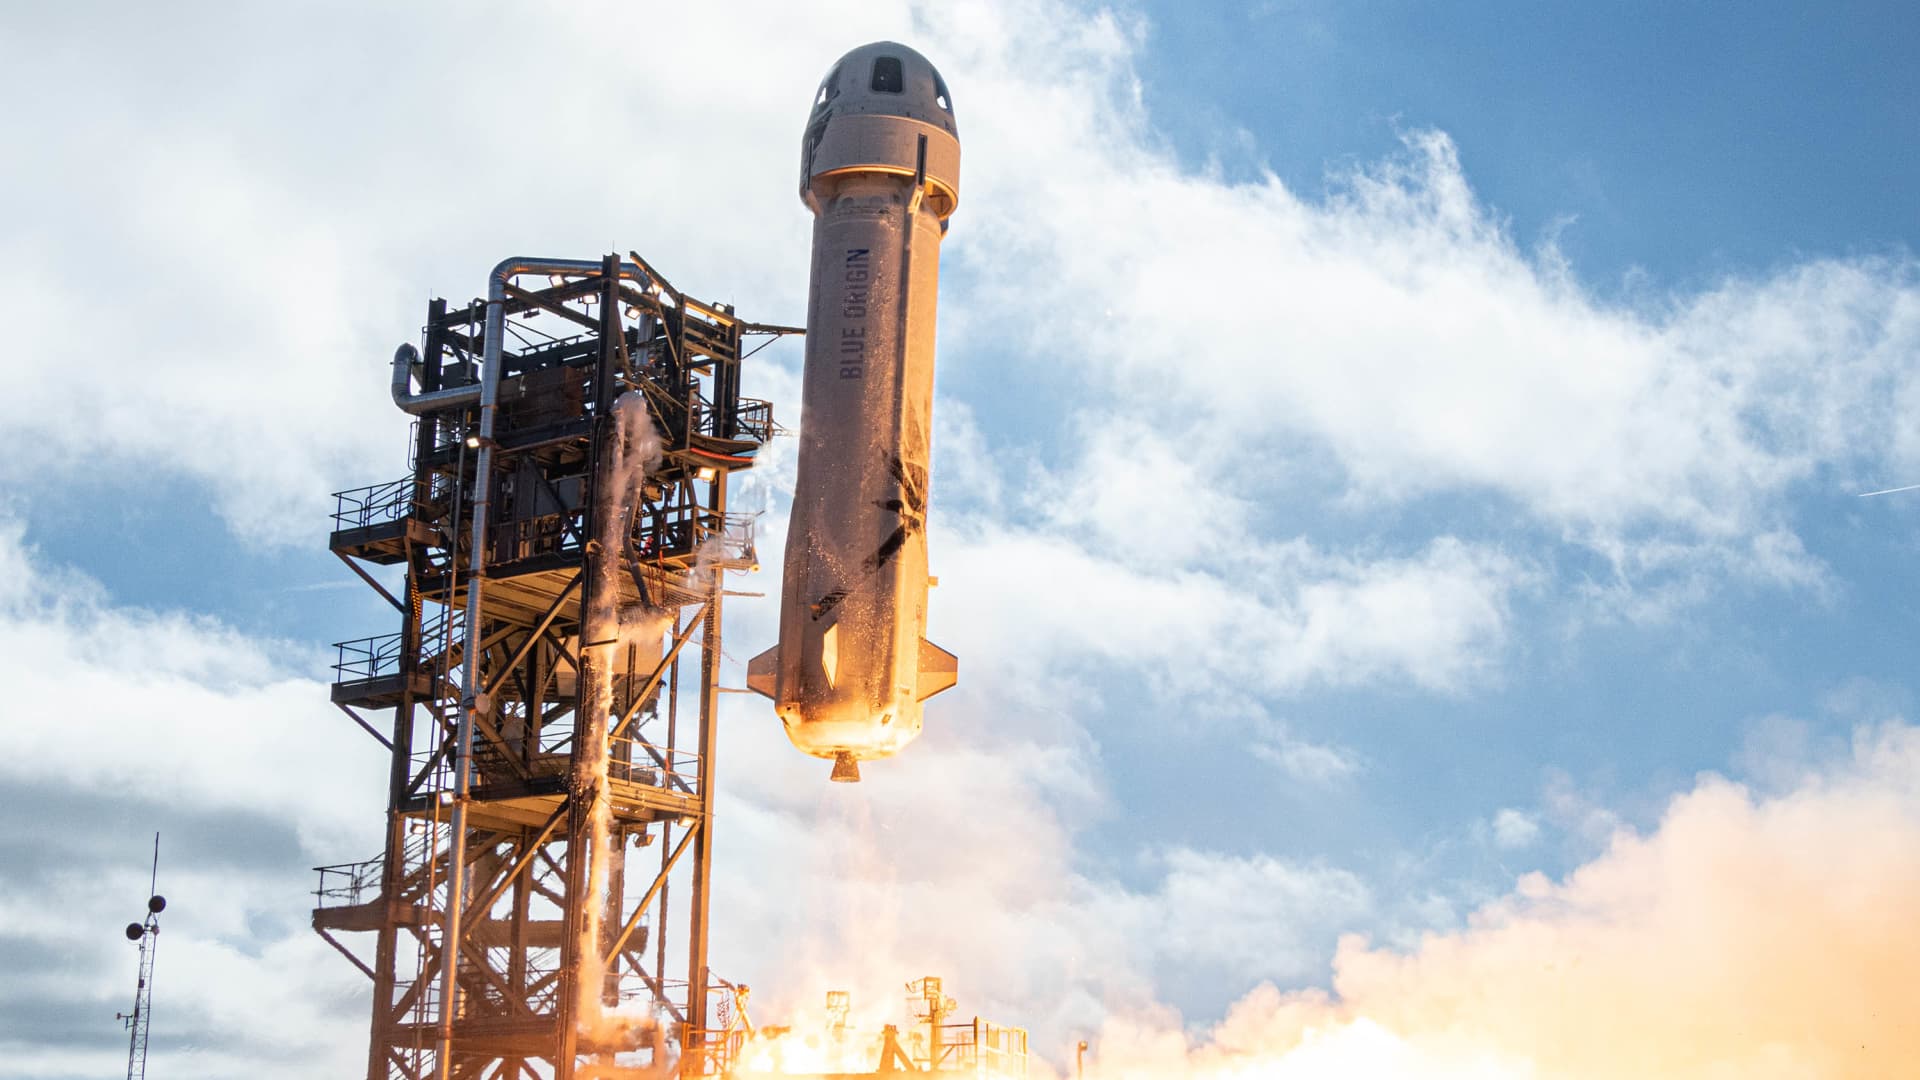 Jeff Bezos' Blue Origin launches New Shepard rocket NS-15 test flight